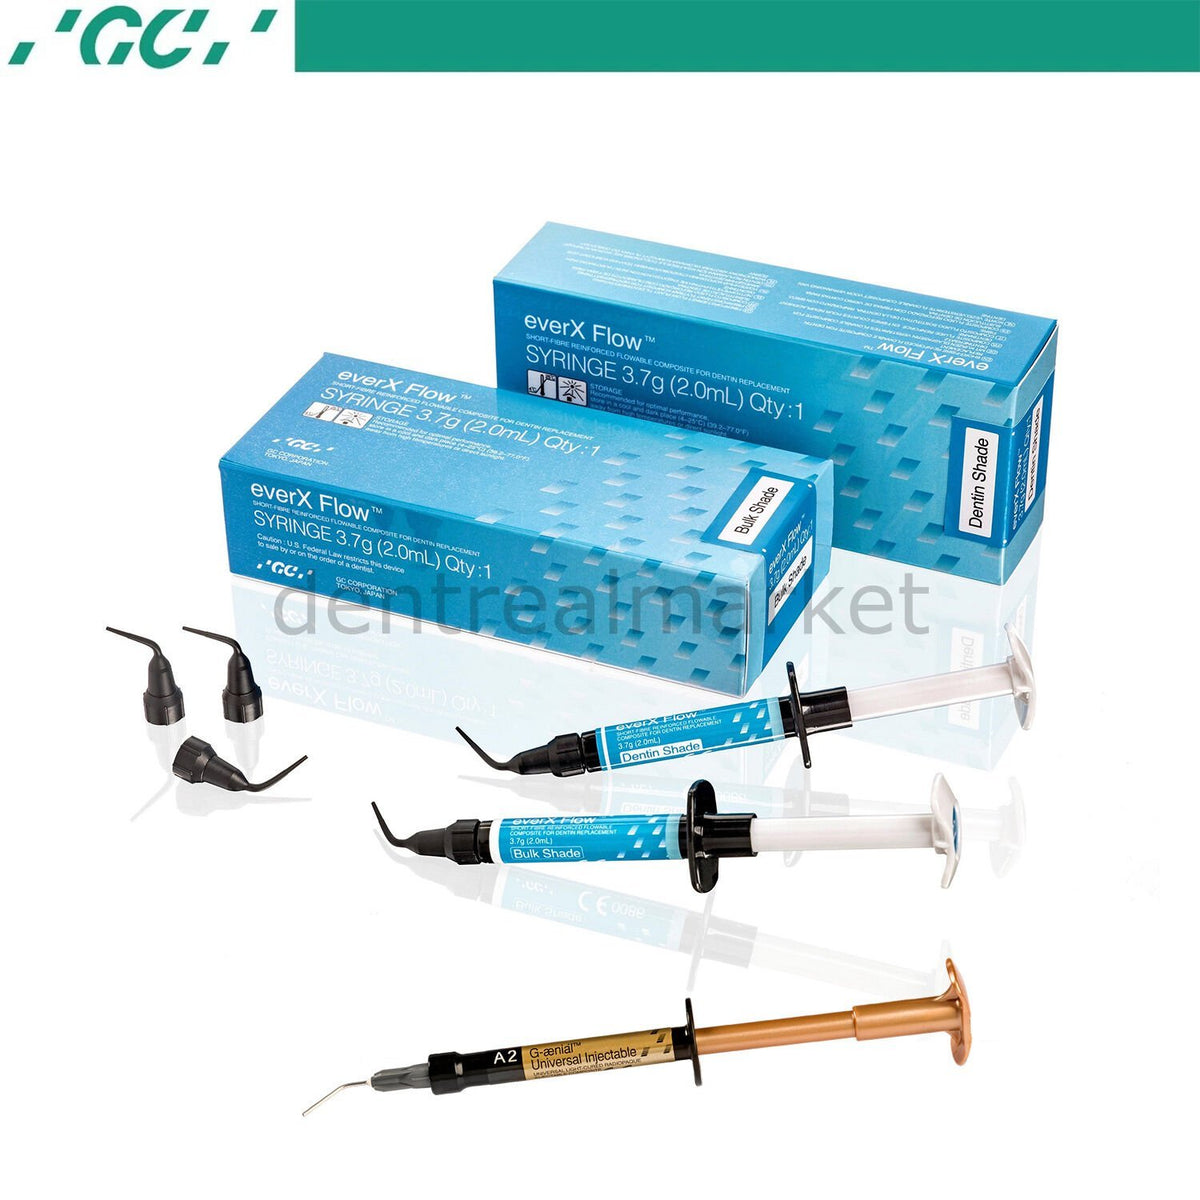 DentrealStore - Gc Dental Everx Flow + G-aenial injectable Campaign - Fiber Reinforced Composite